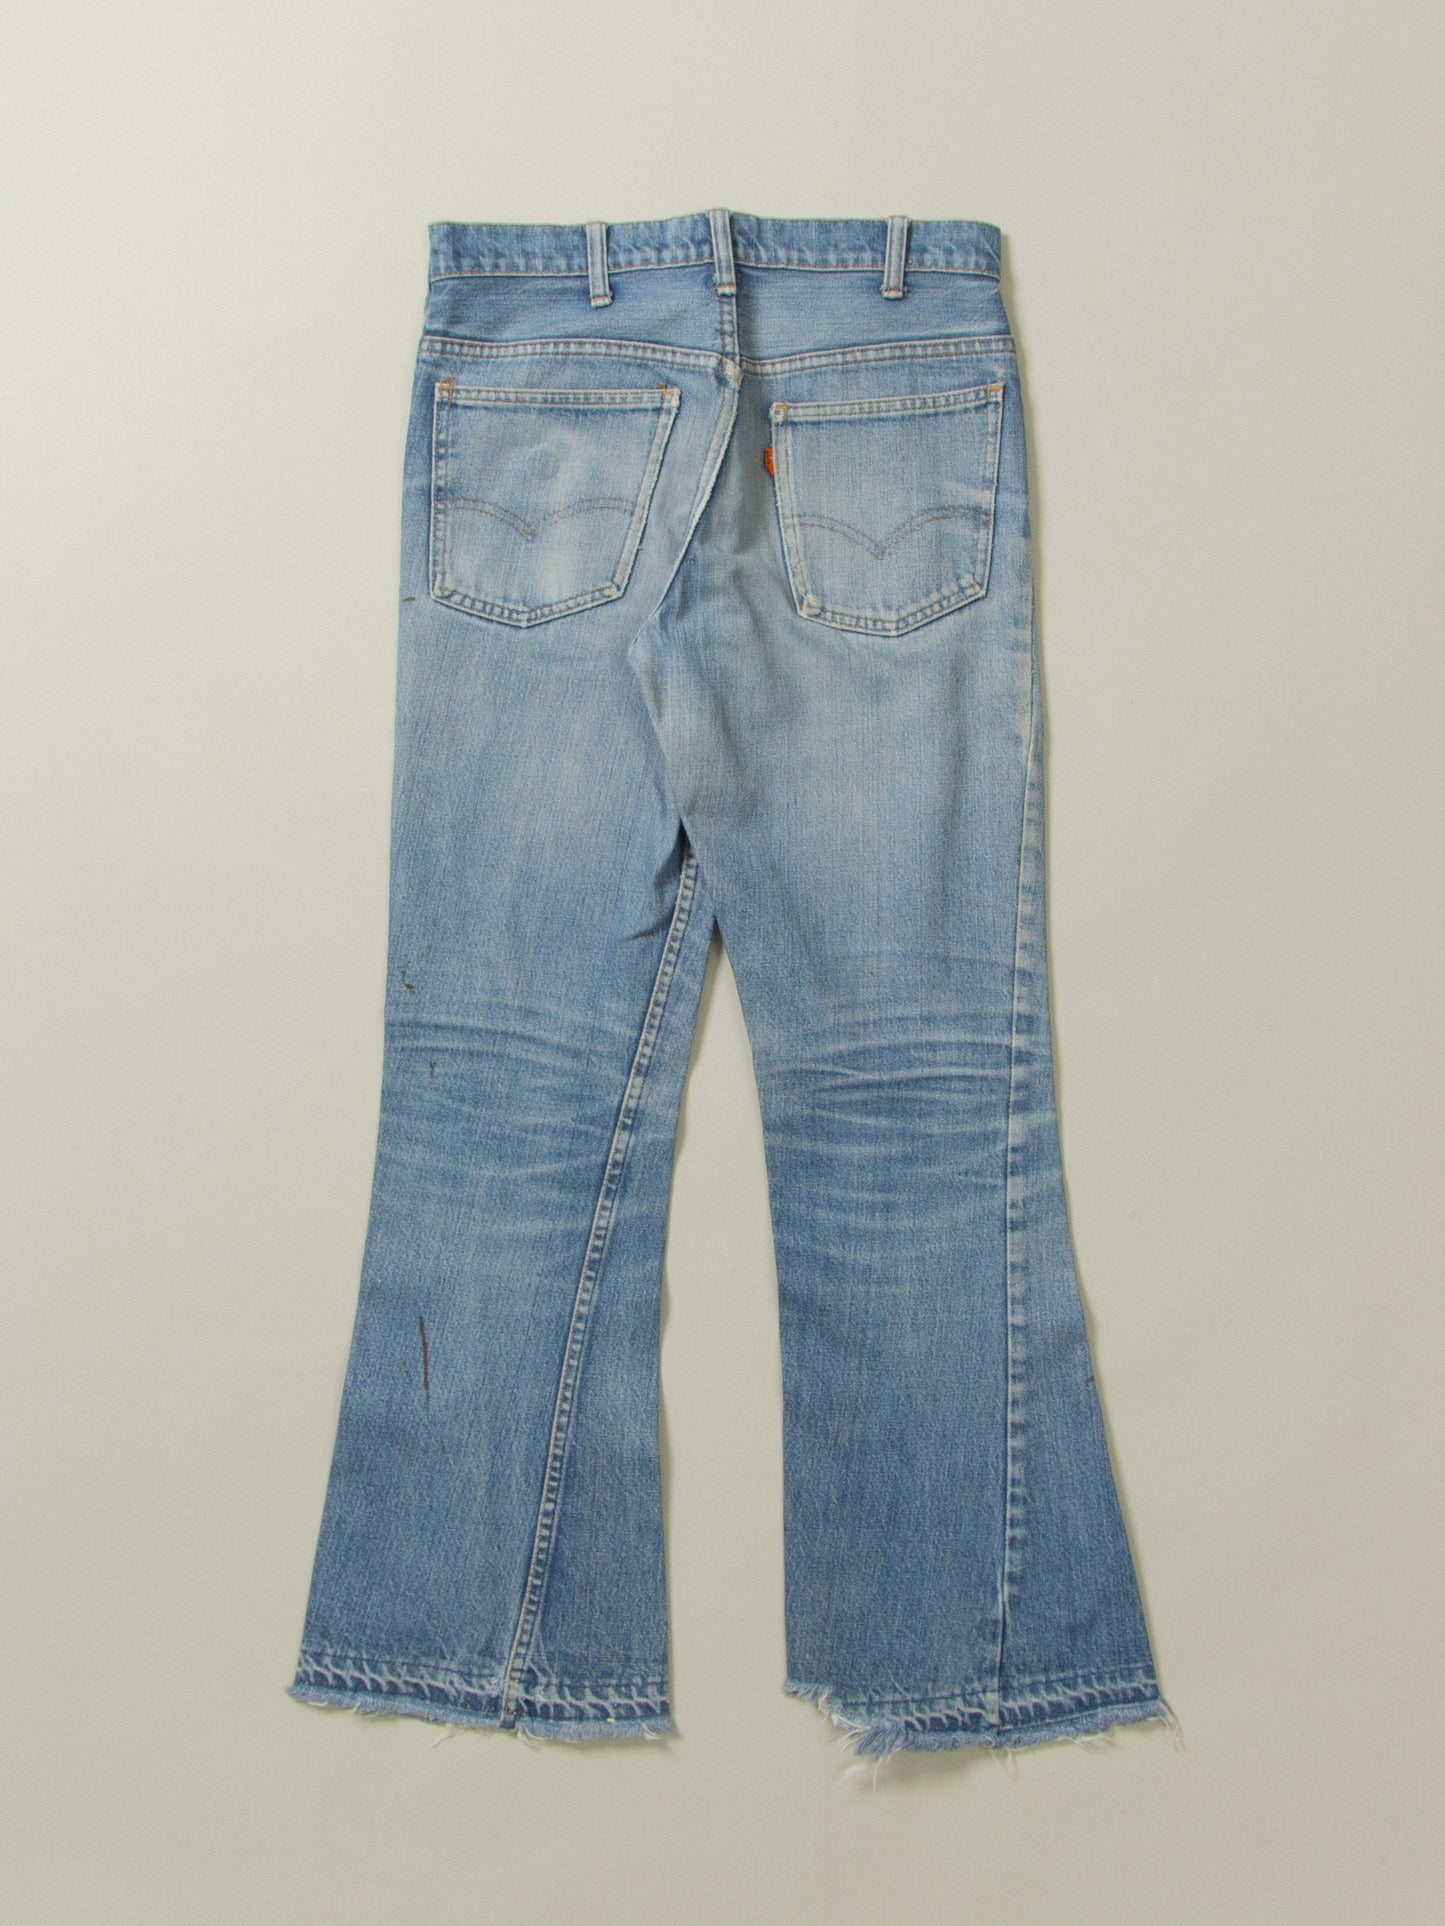 Vtg Late 1960s Levi's Big E Orange Tab Flared Jeans (28x30)